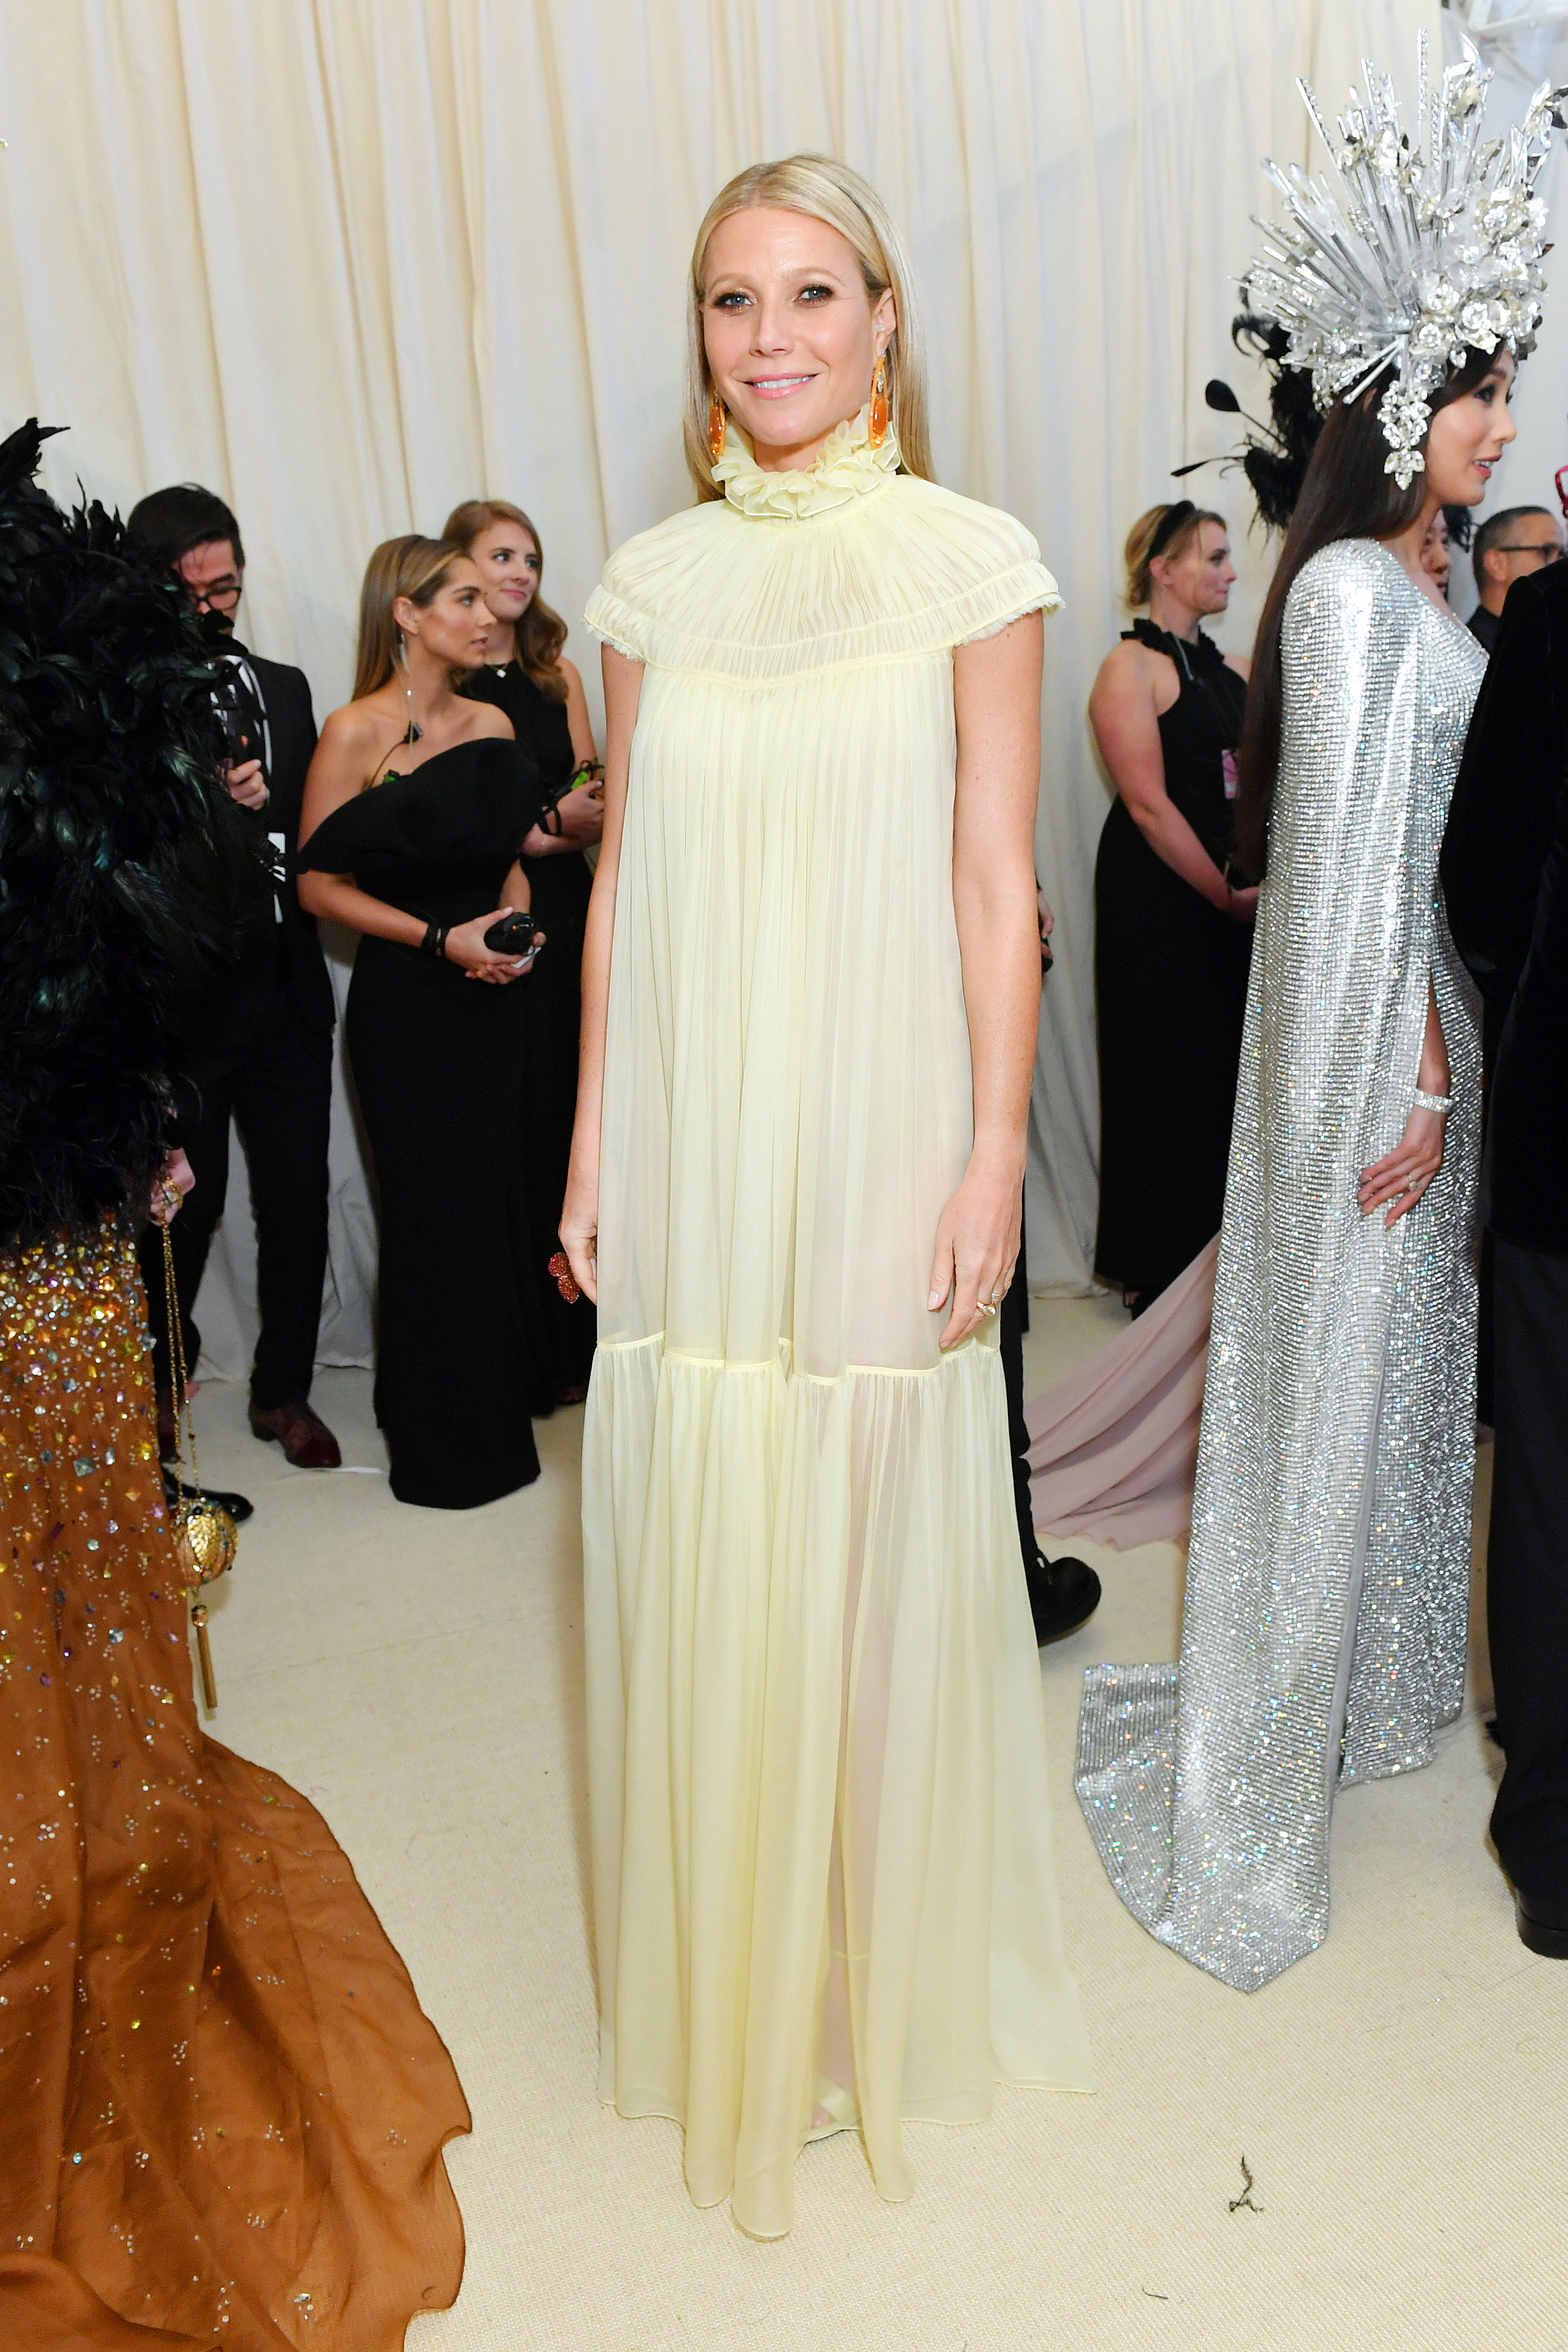 Gwyneth Paltrow bei der Met Gala 2019 in New York | Quelle: Getty Images